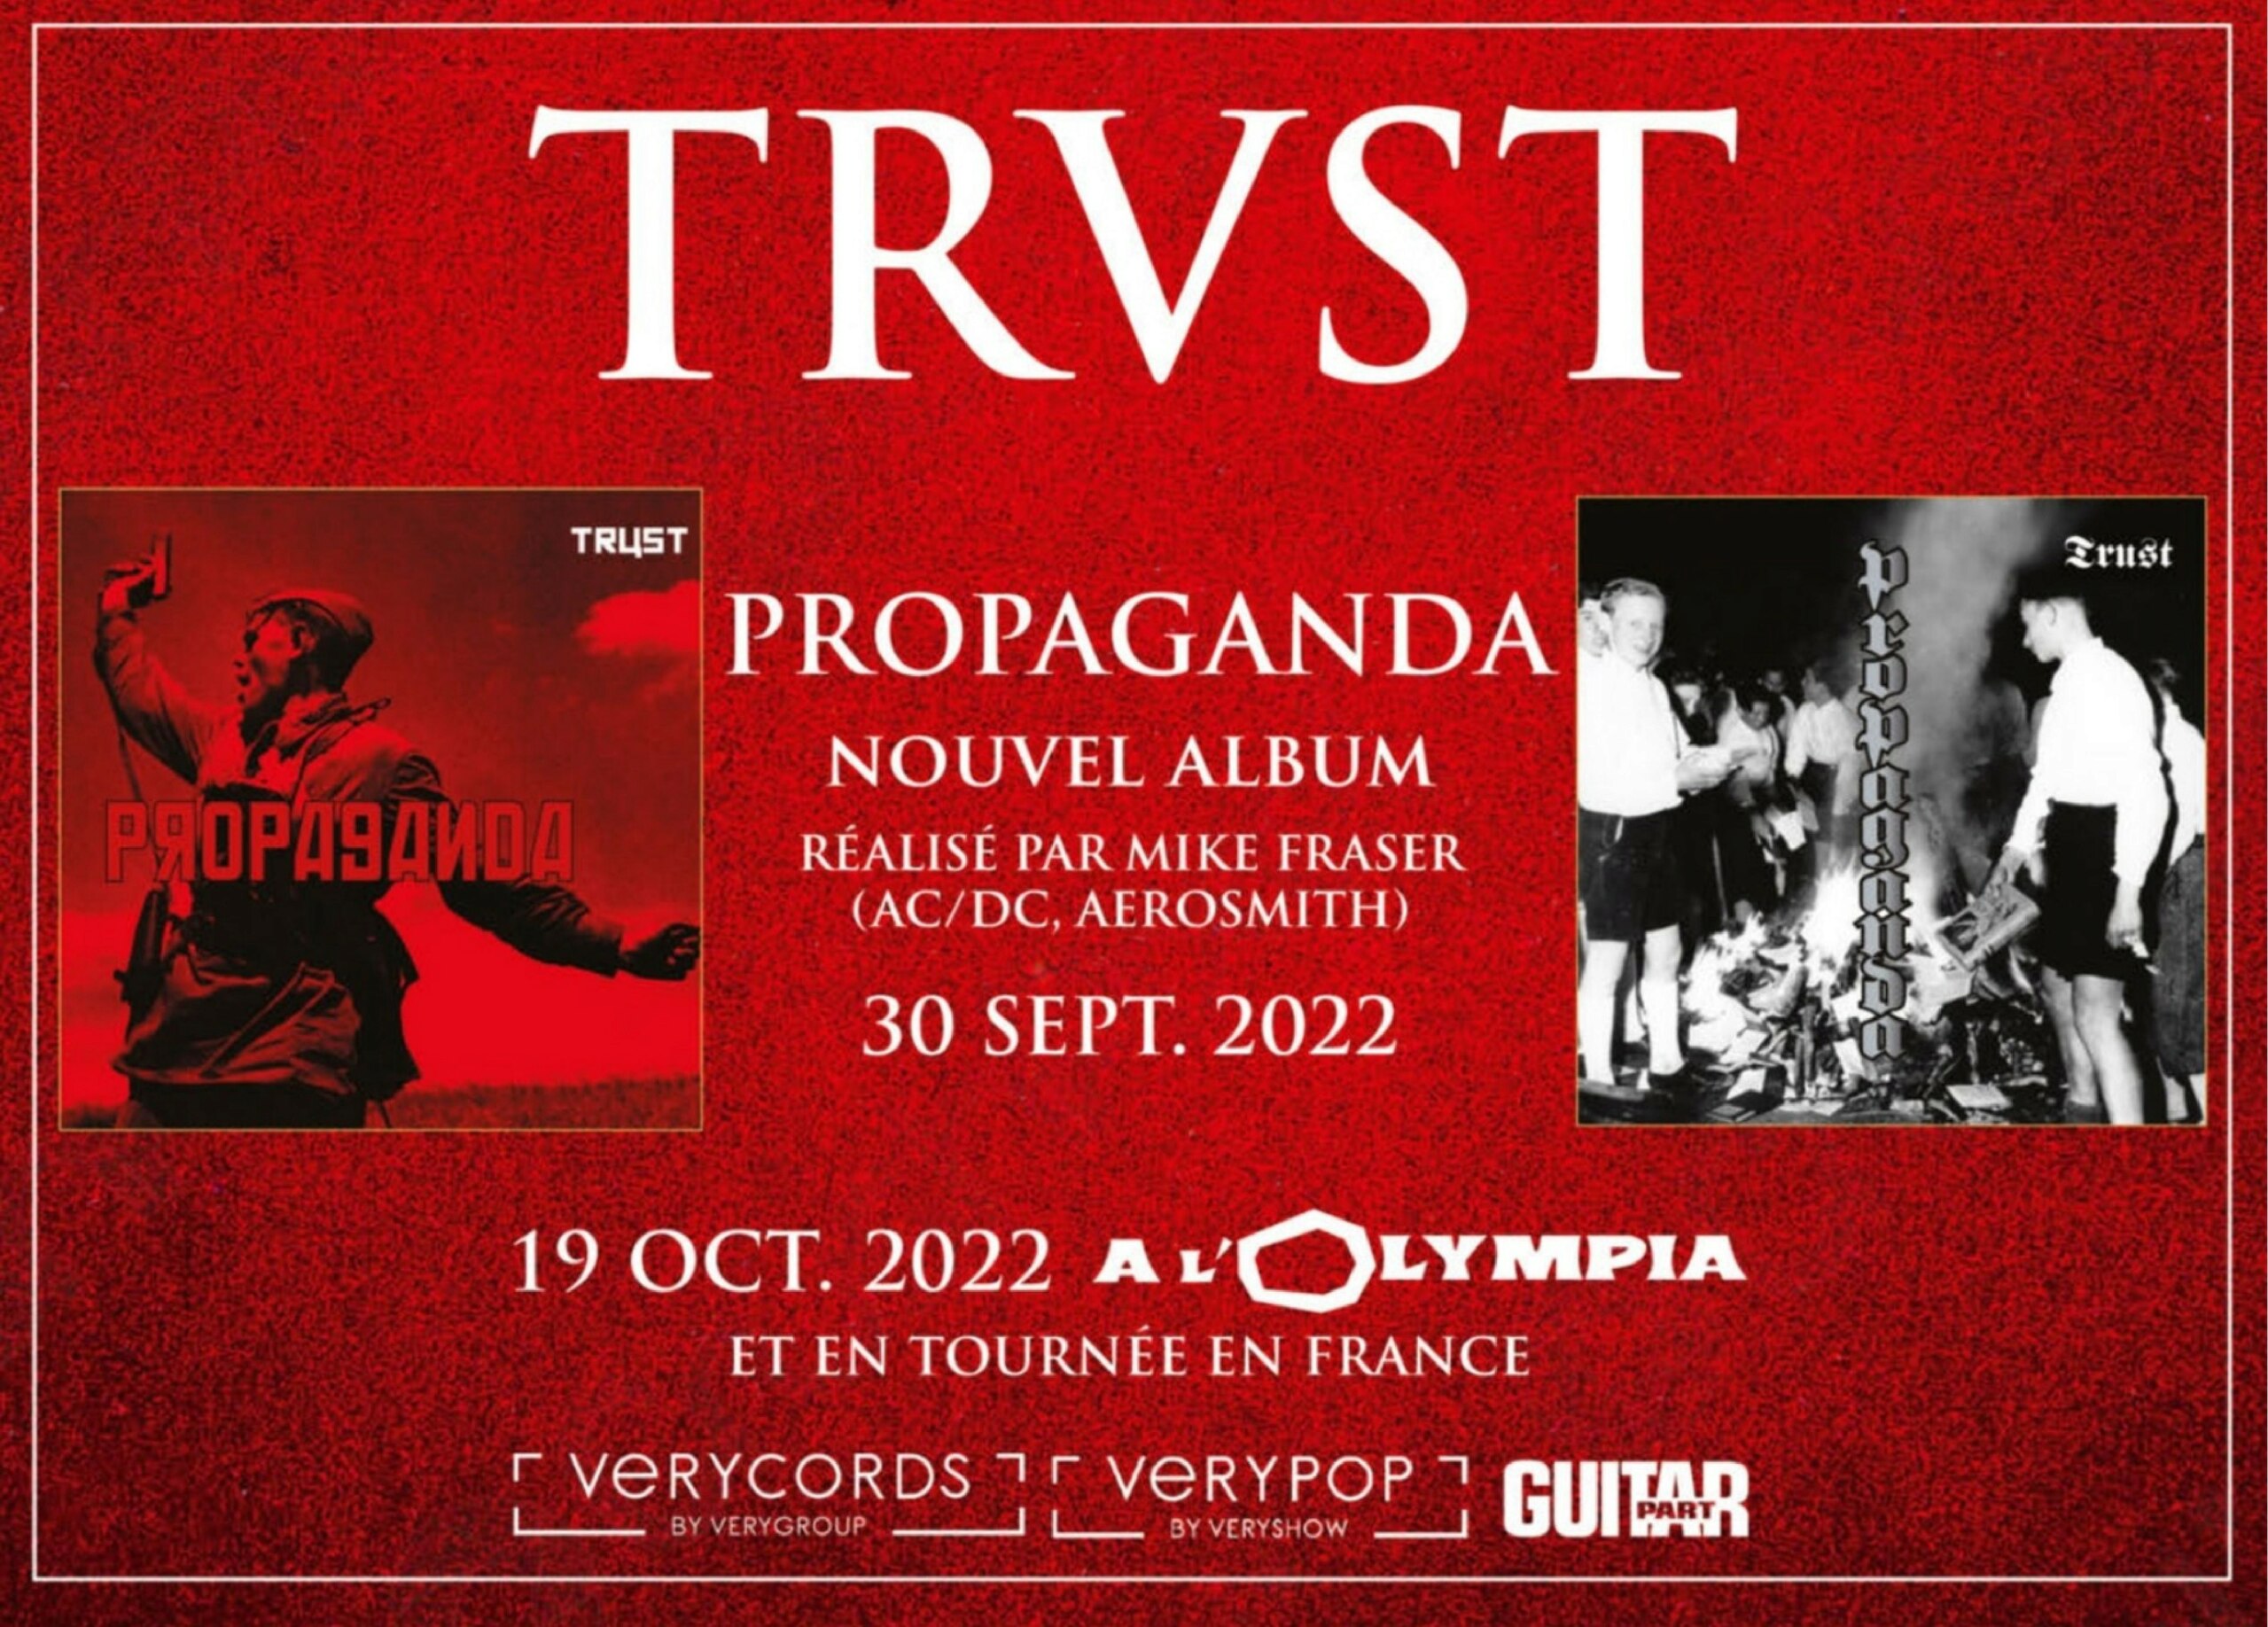 TRUST "propaganda" 30 sept 2022 Rock_f45